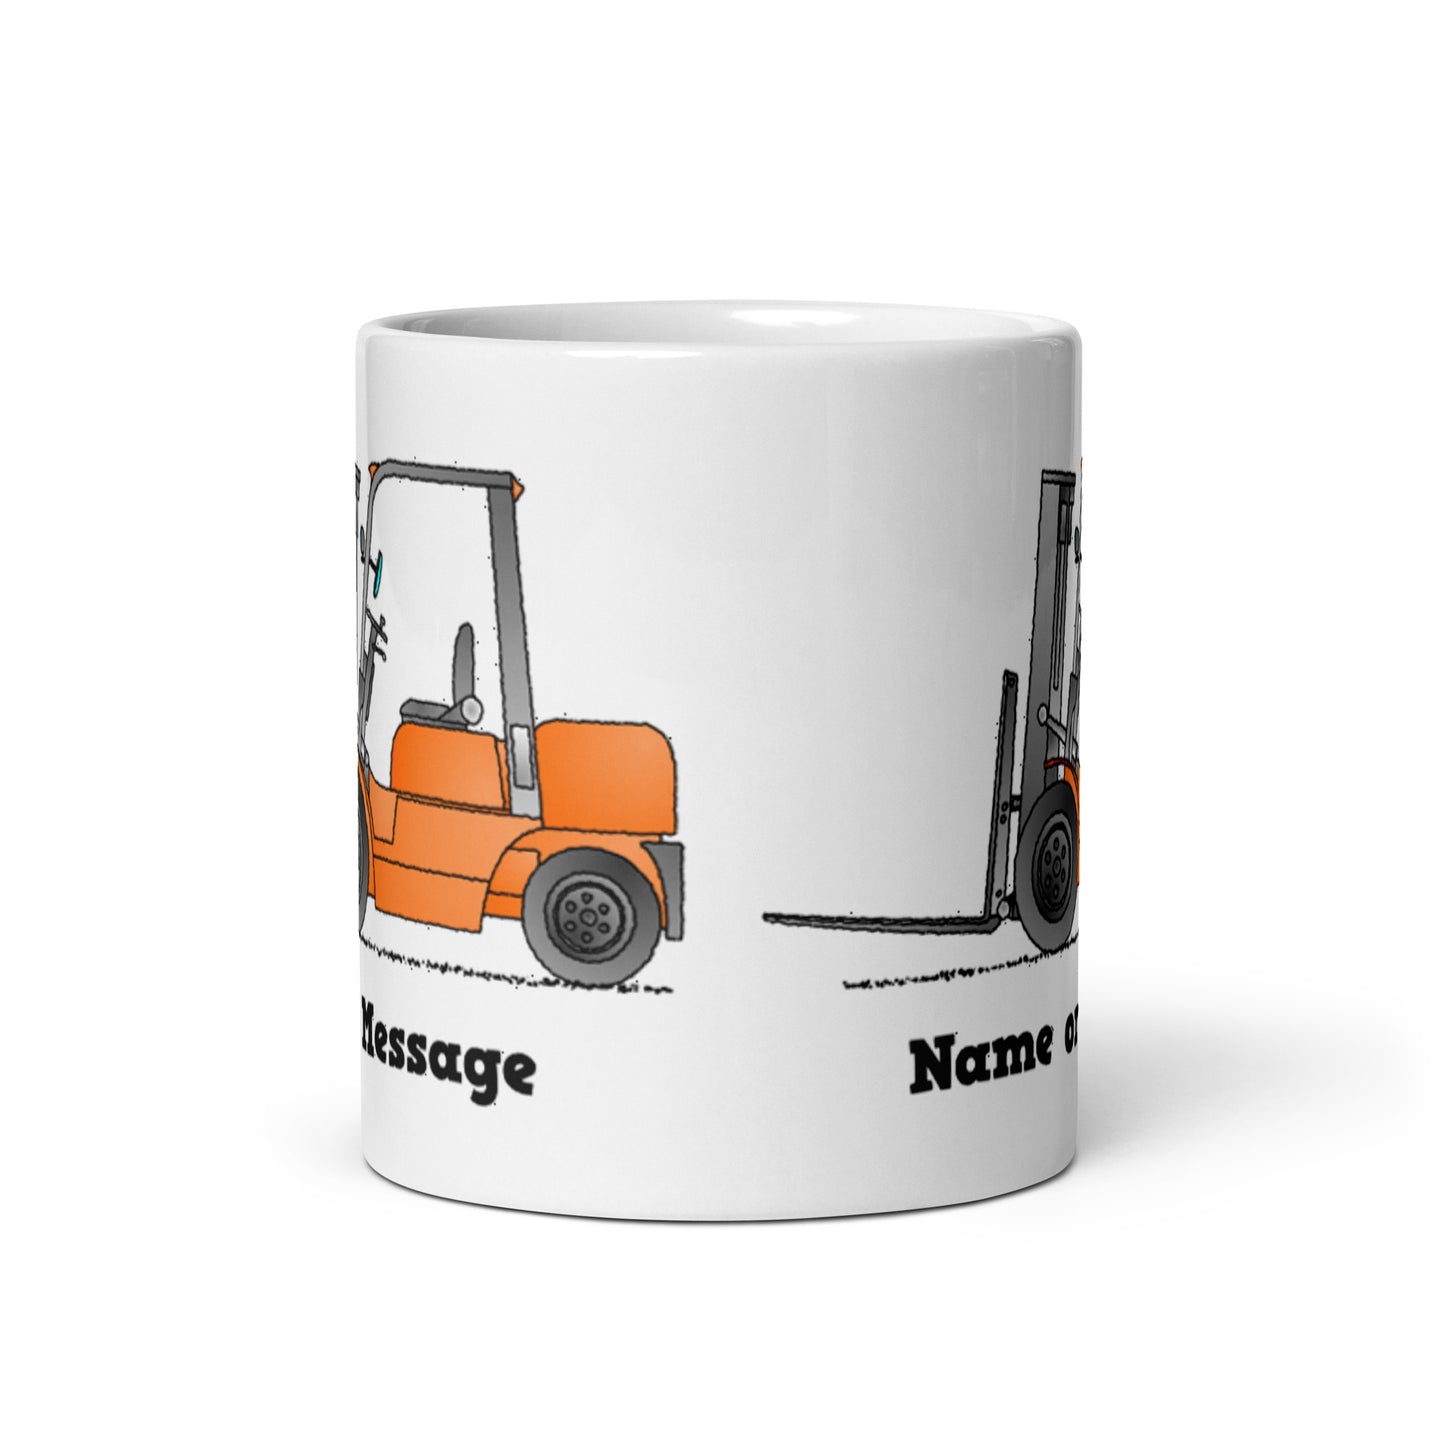 Personalized Orange Forklift Truck Mug